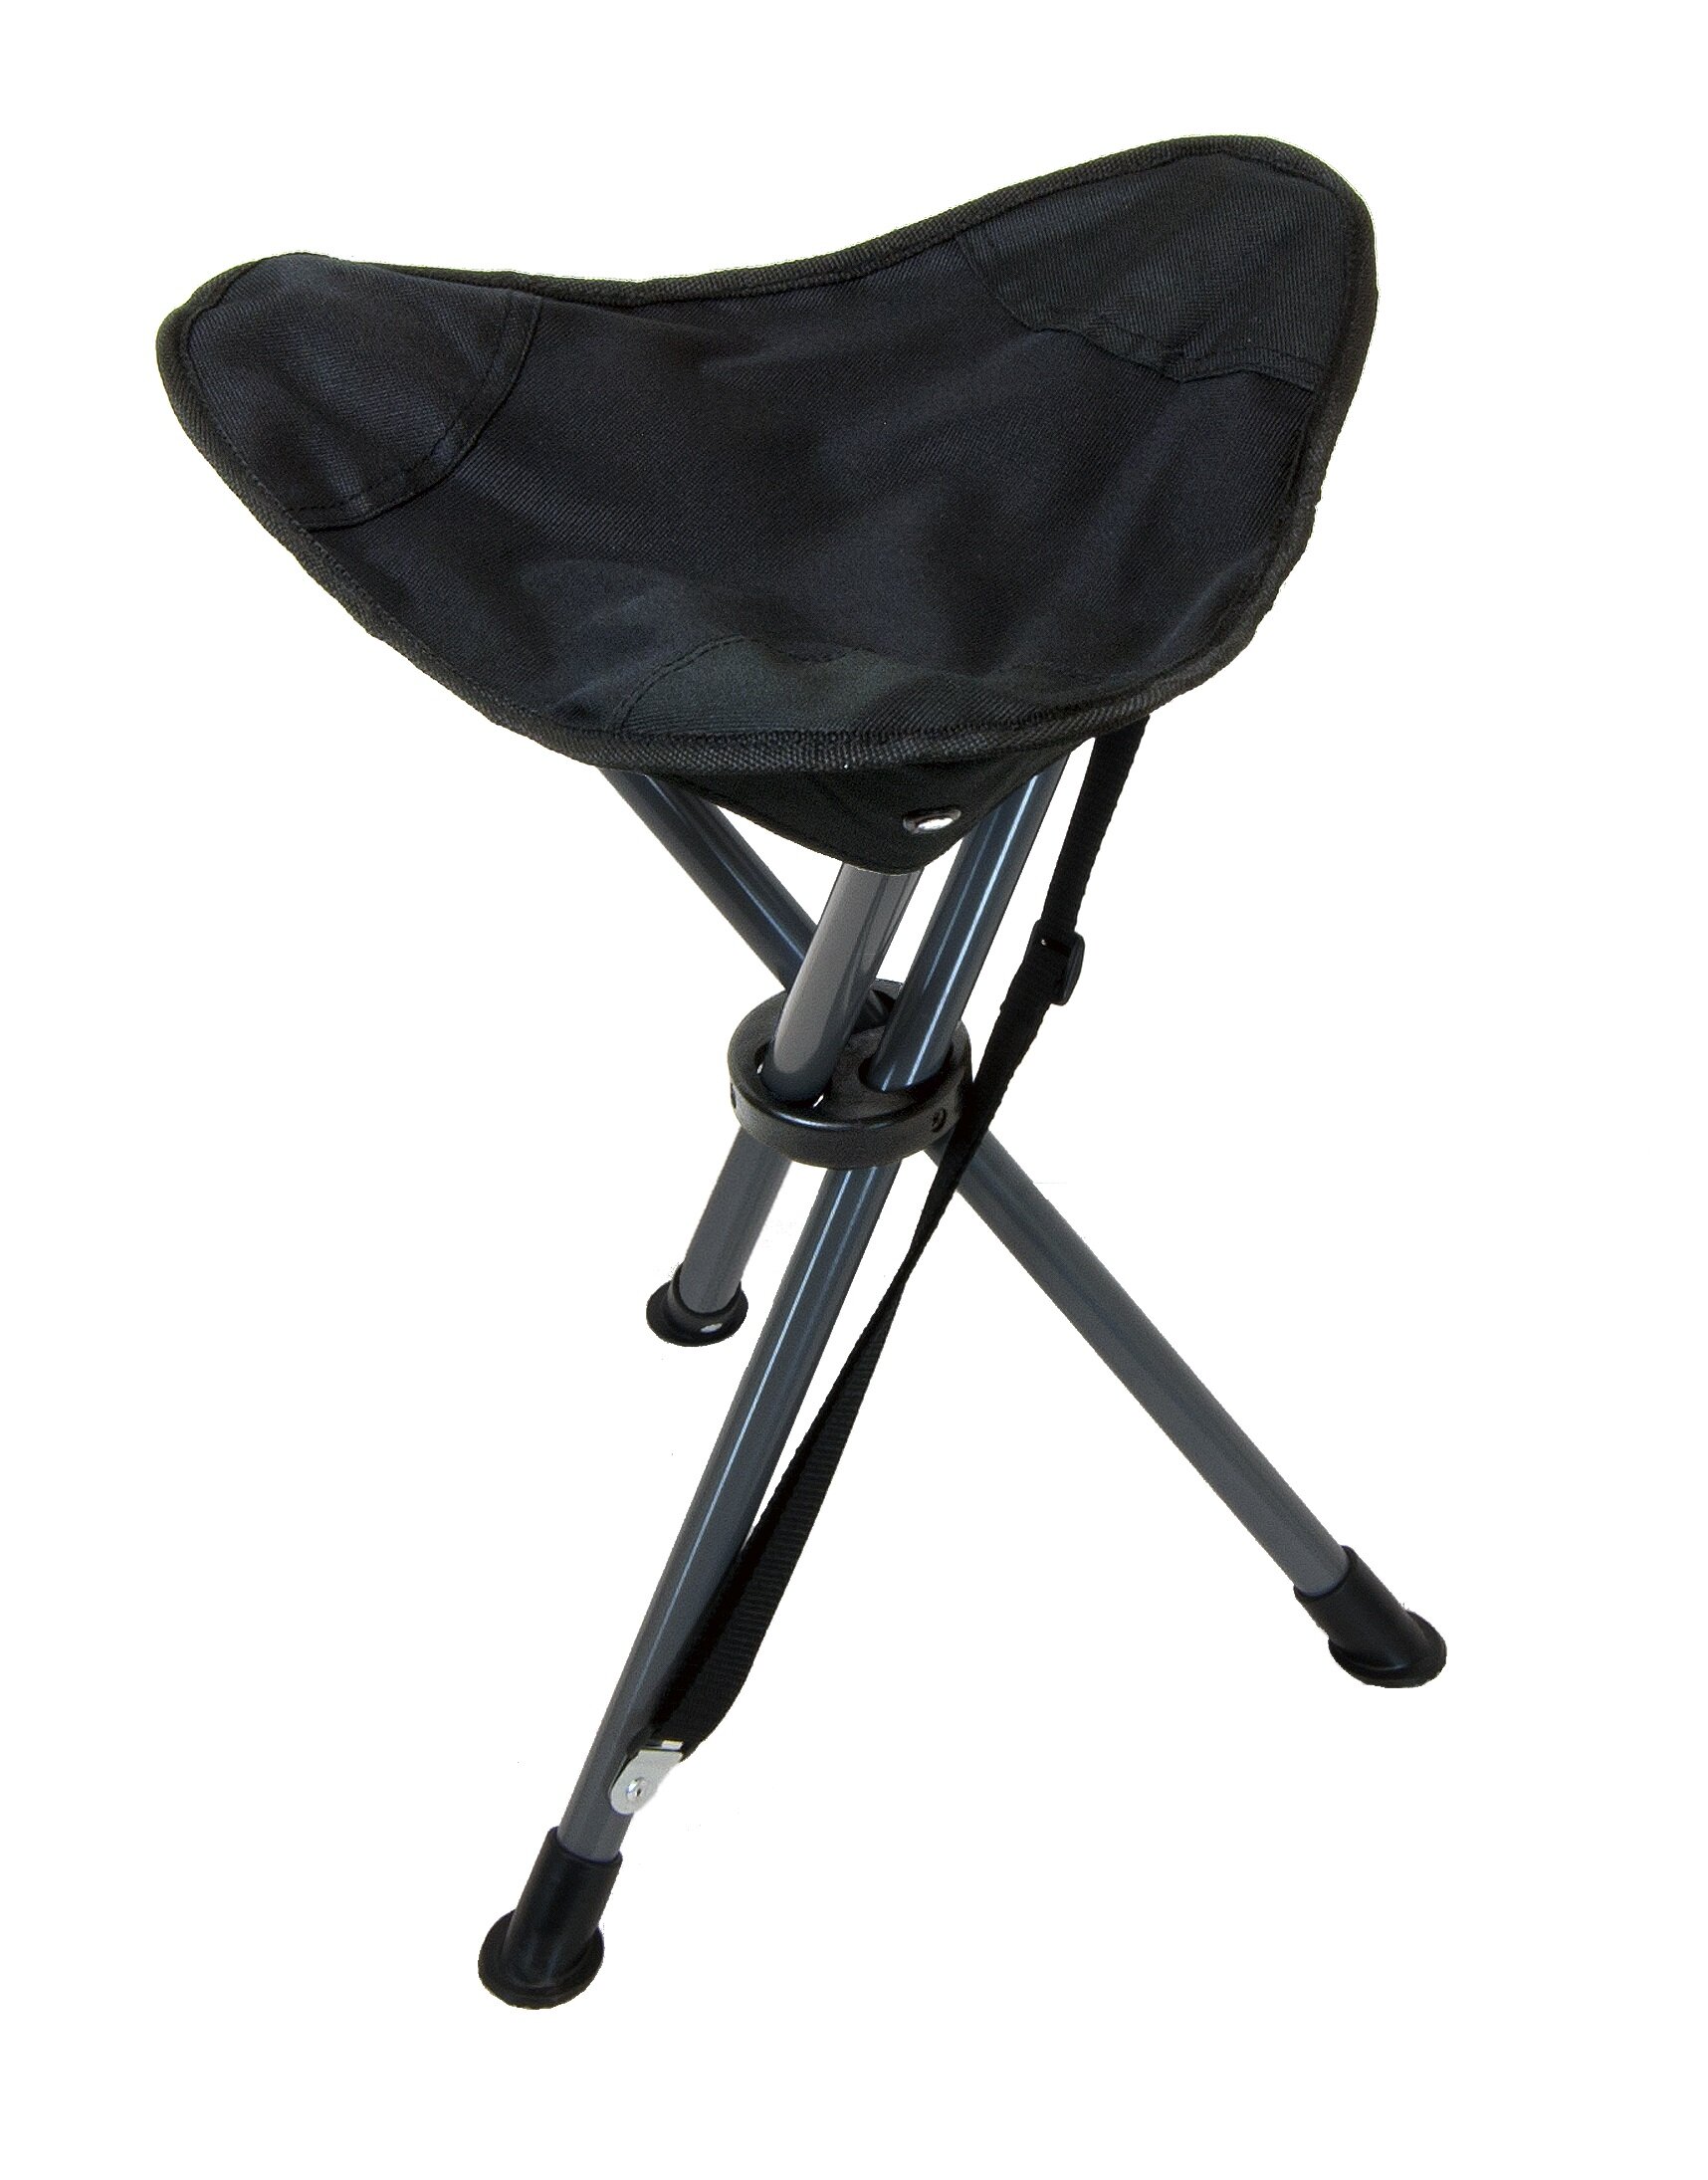 tripod camping stool